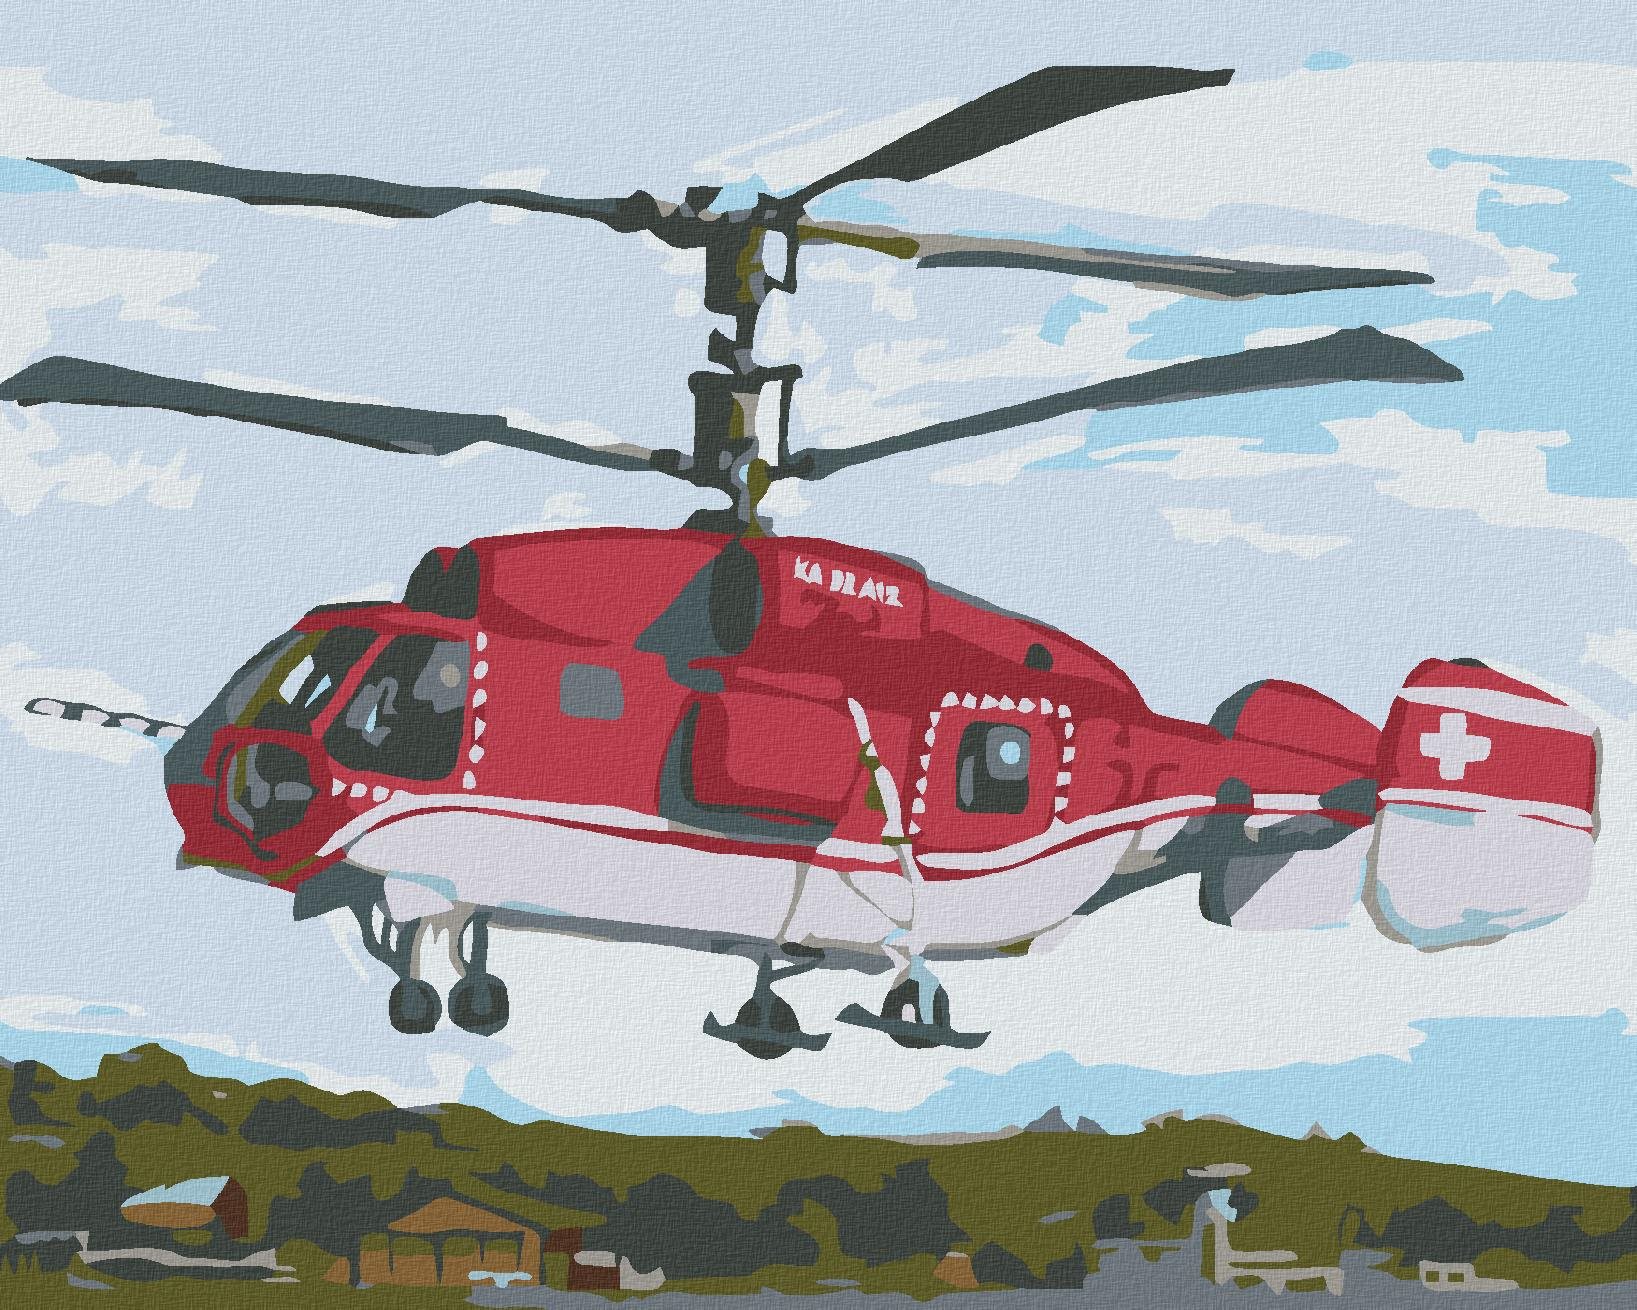 Maľovanie podľa čísel - Záchranársky vrtuľník, 100 x 80 cm, bez rámu a napnutého plátna